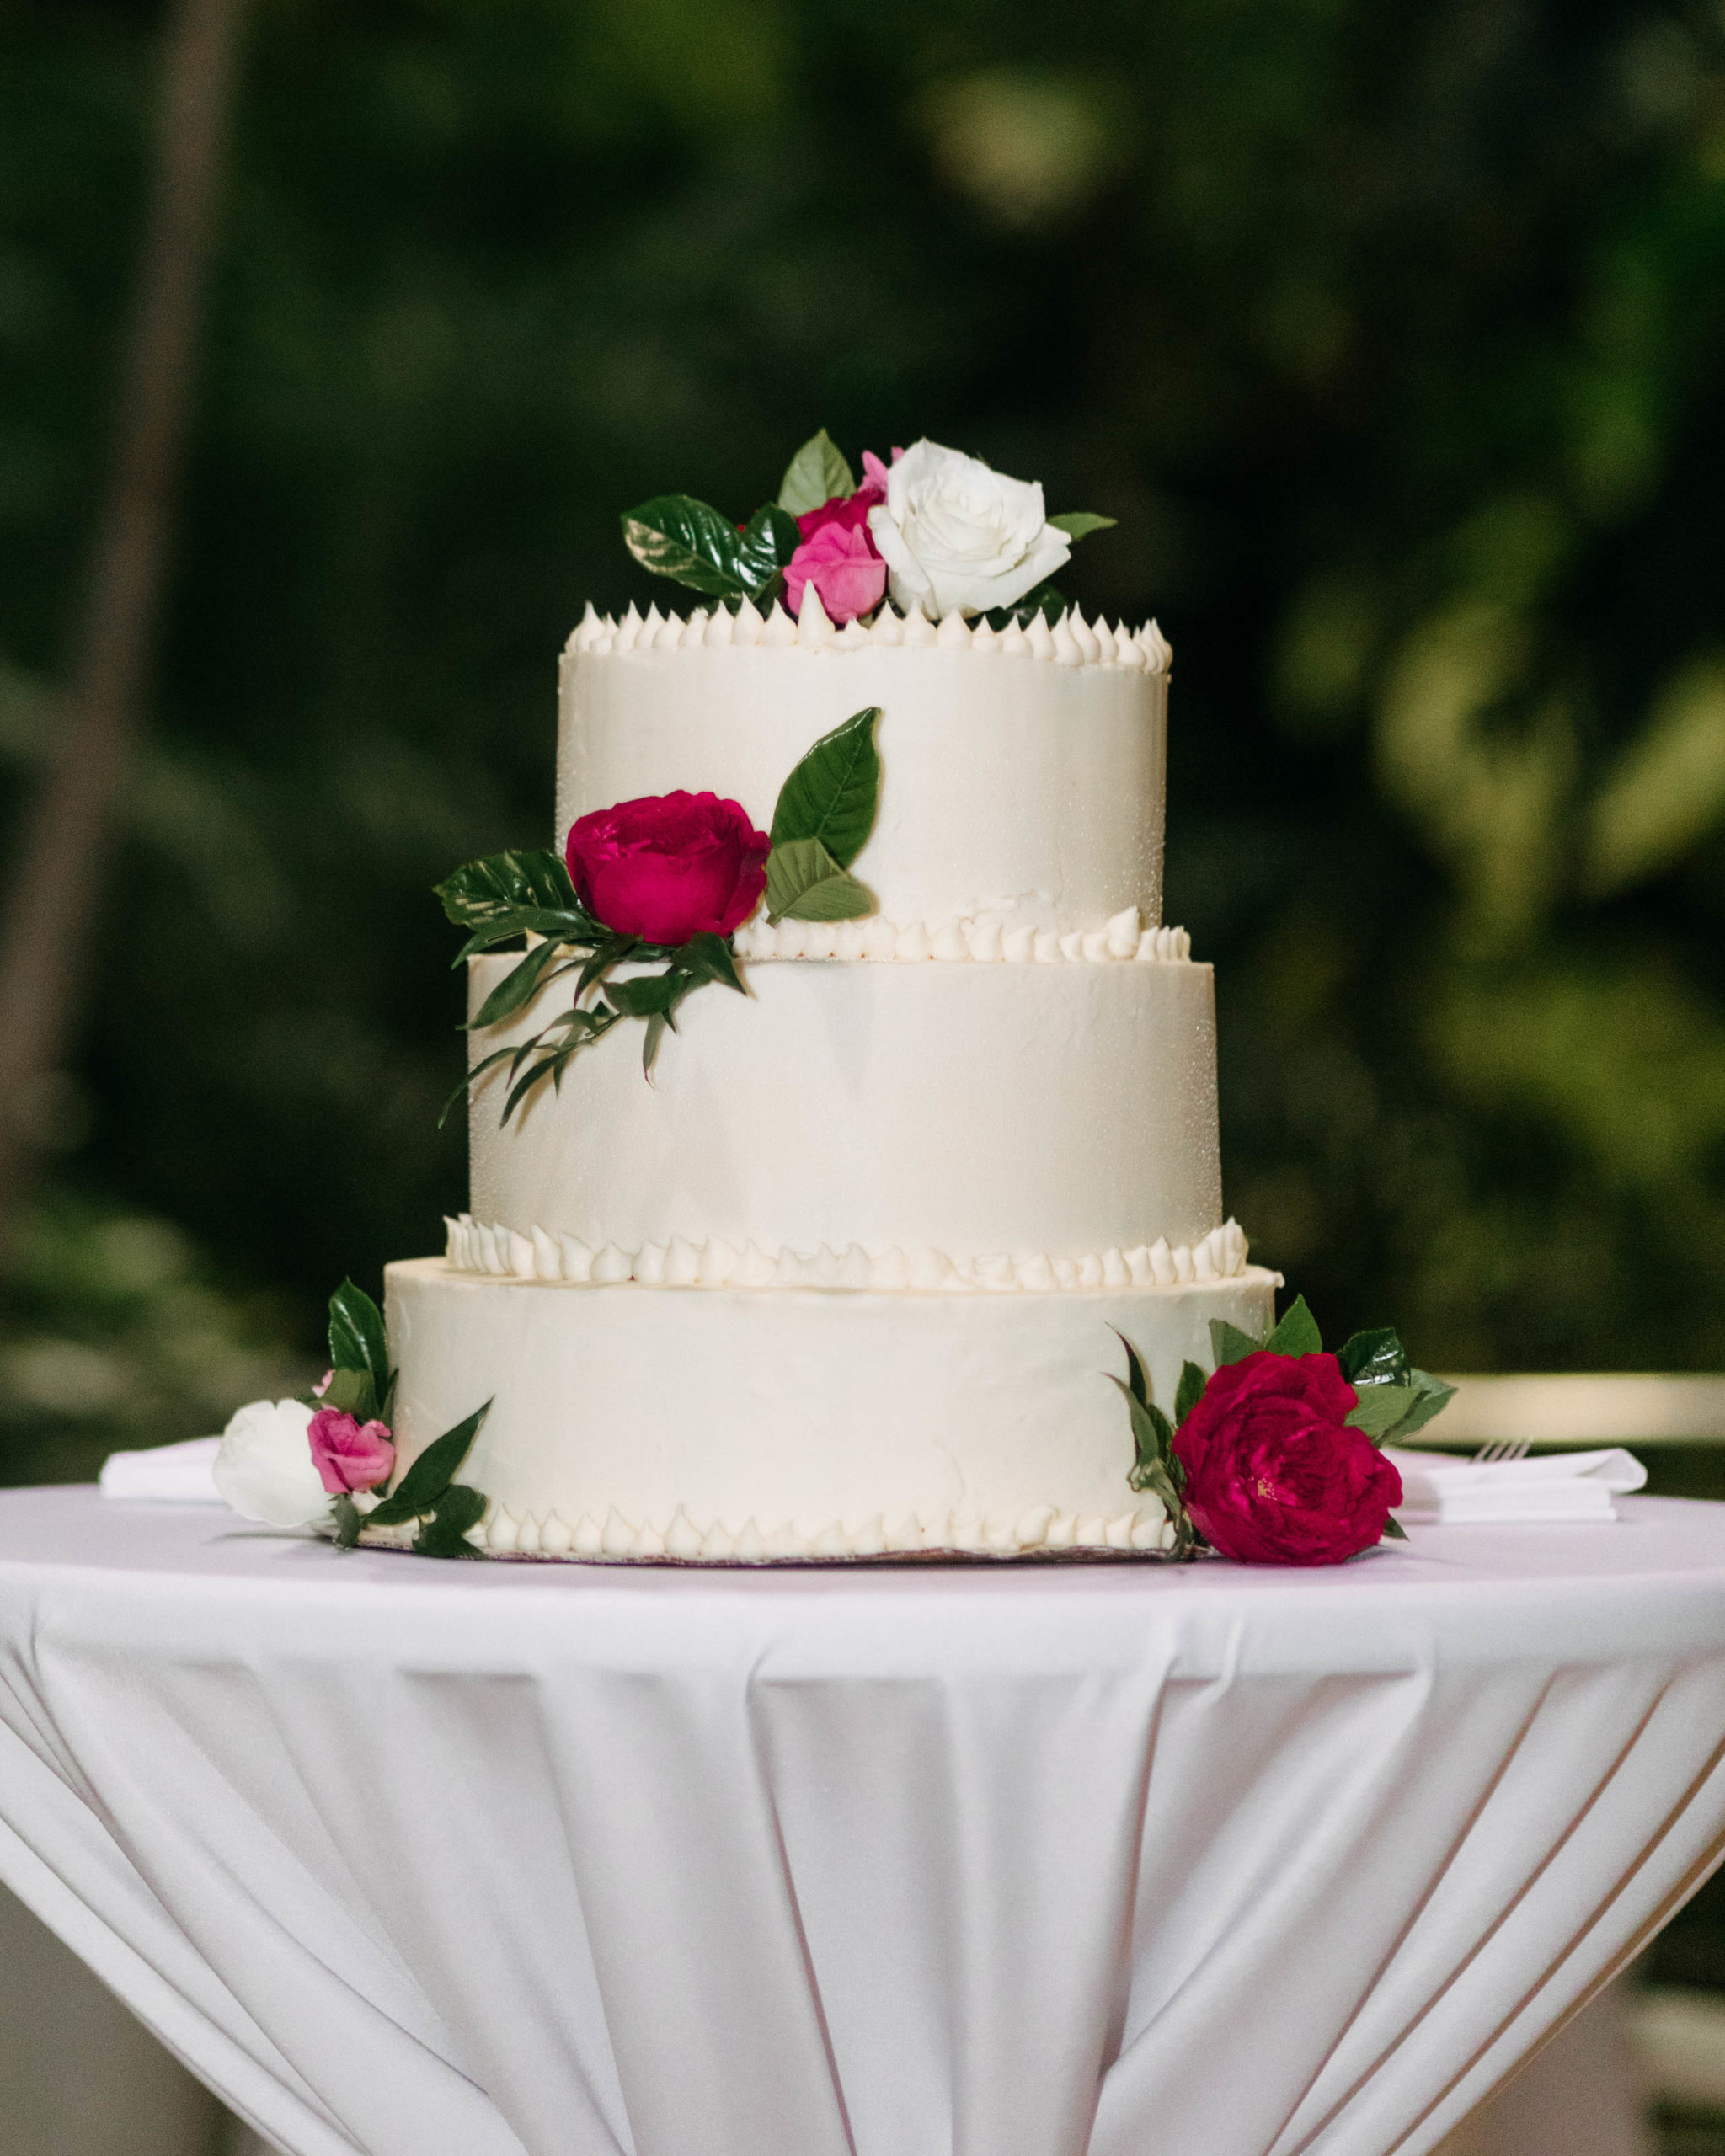 Greenhouse Summer wedding Cake inspiration
